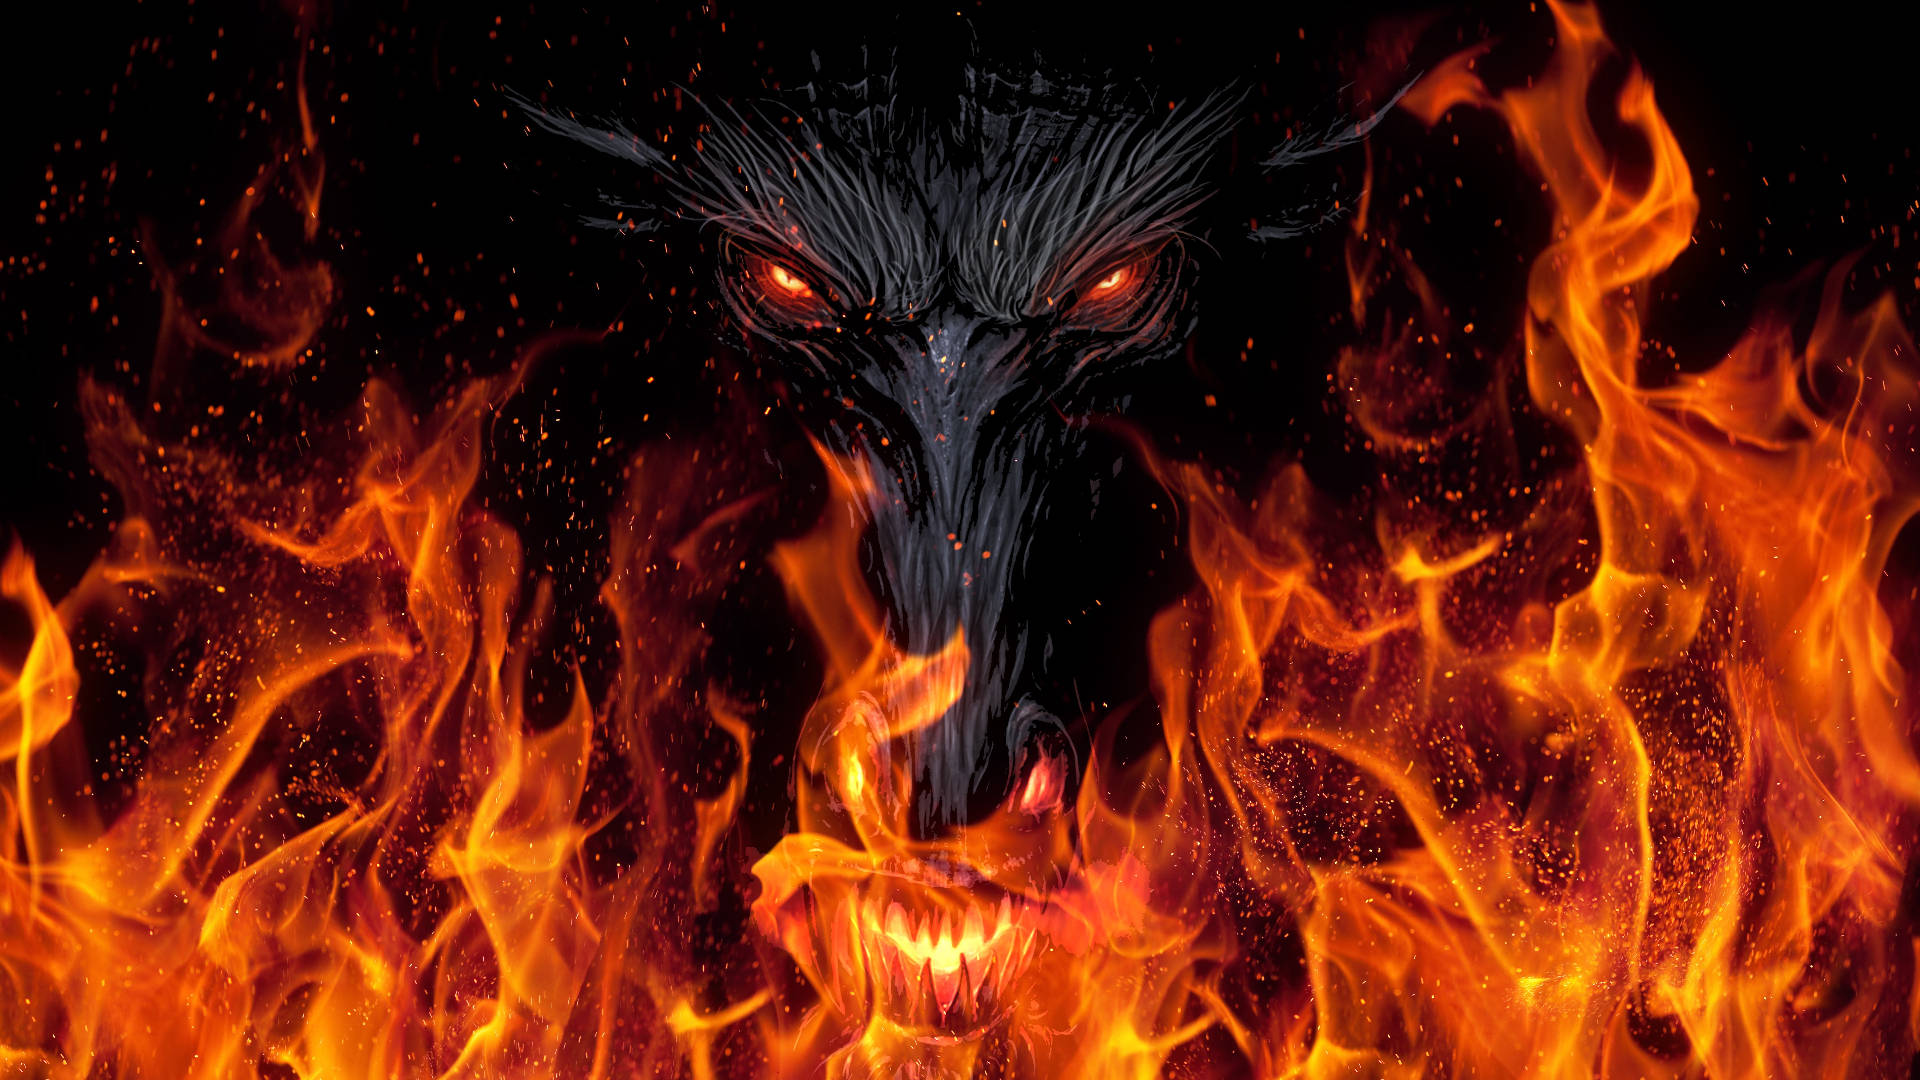 Dark Devil Face Behind Flames Wallpaper